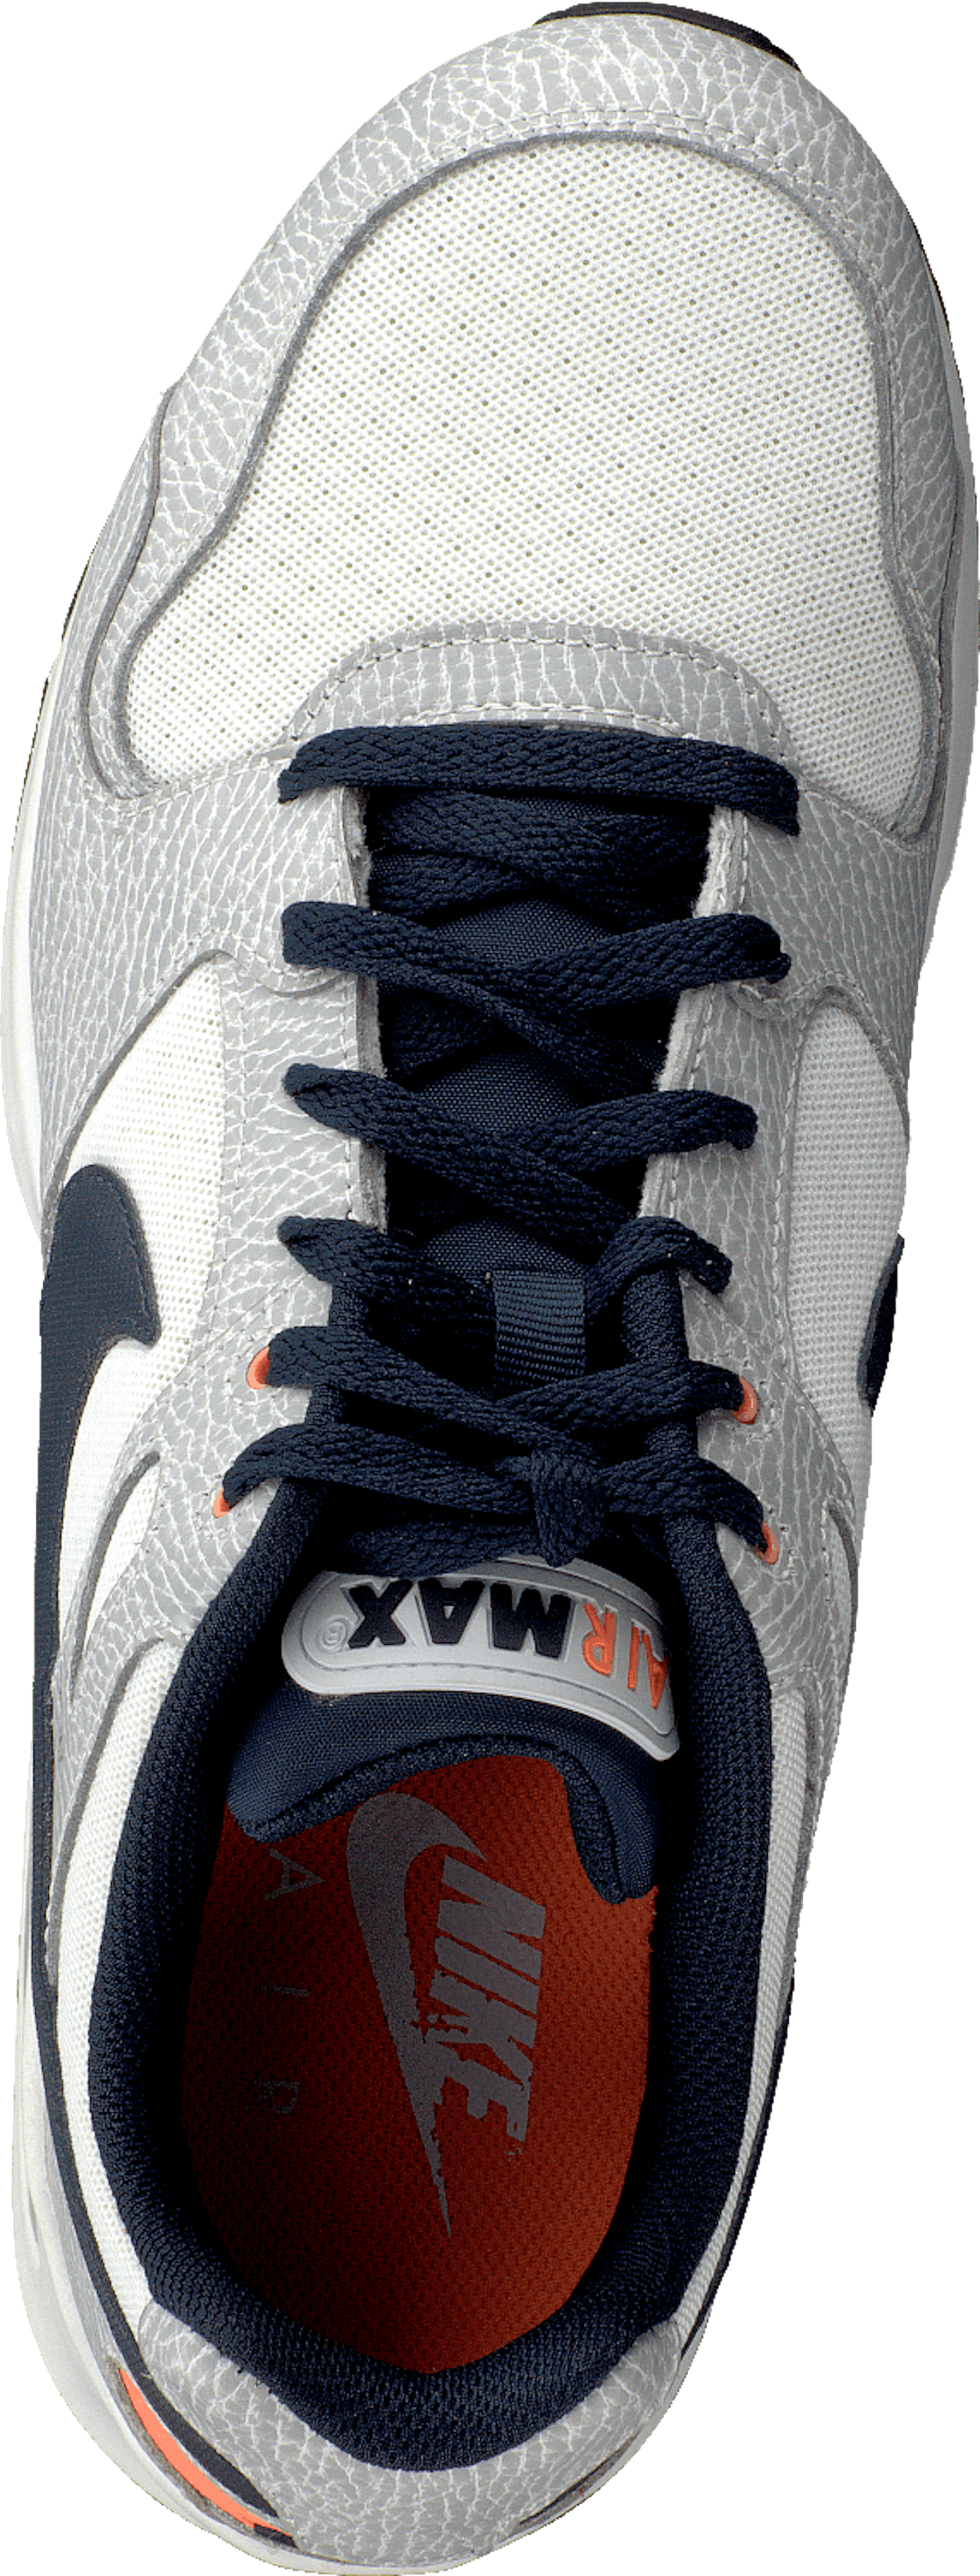 Nike Air Max Coliseum Grey